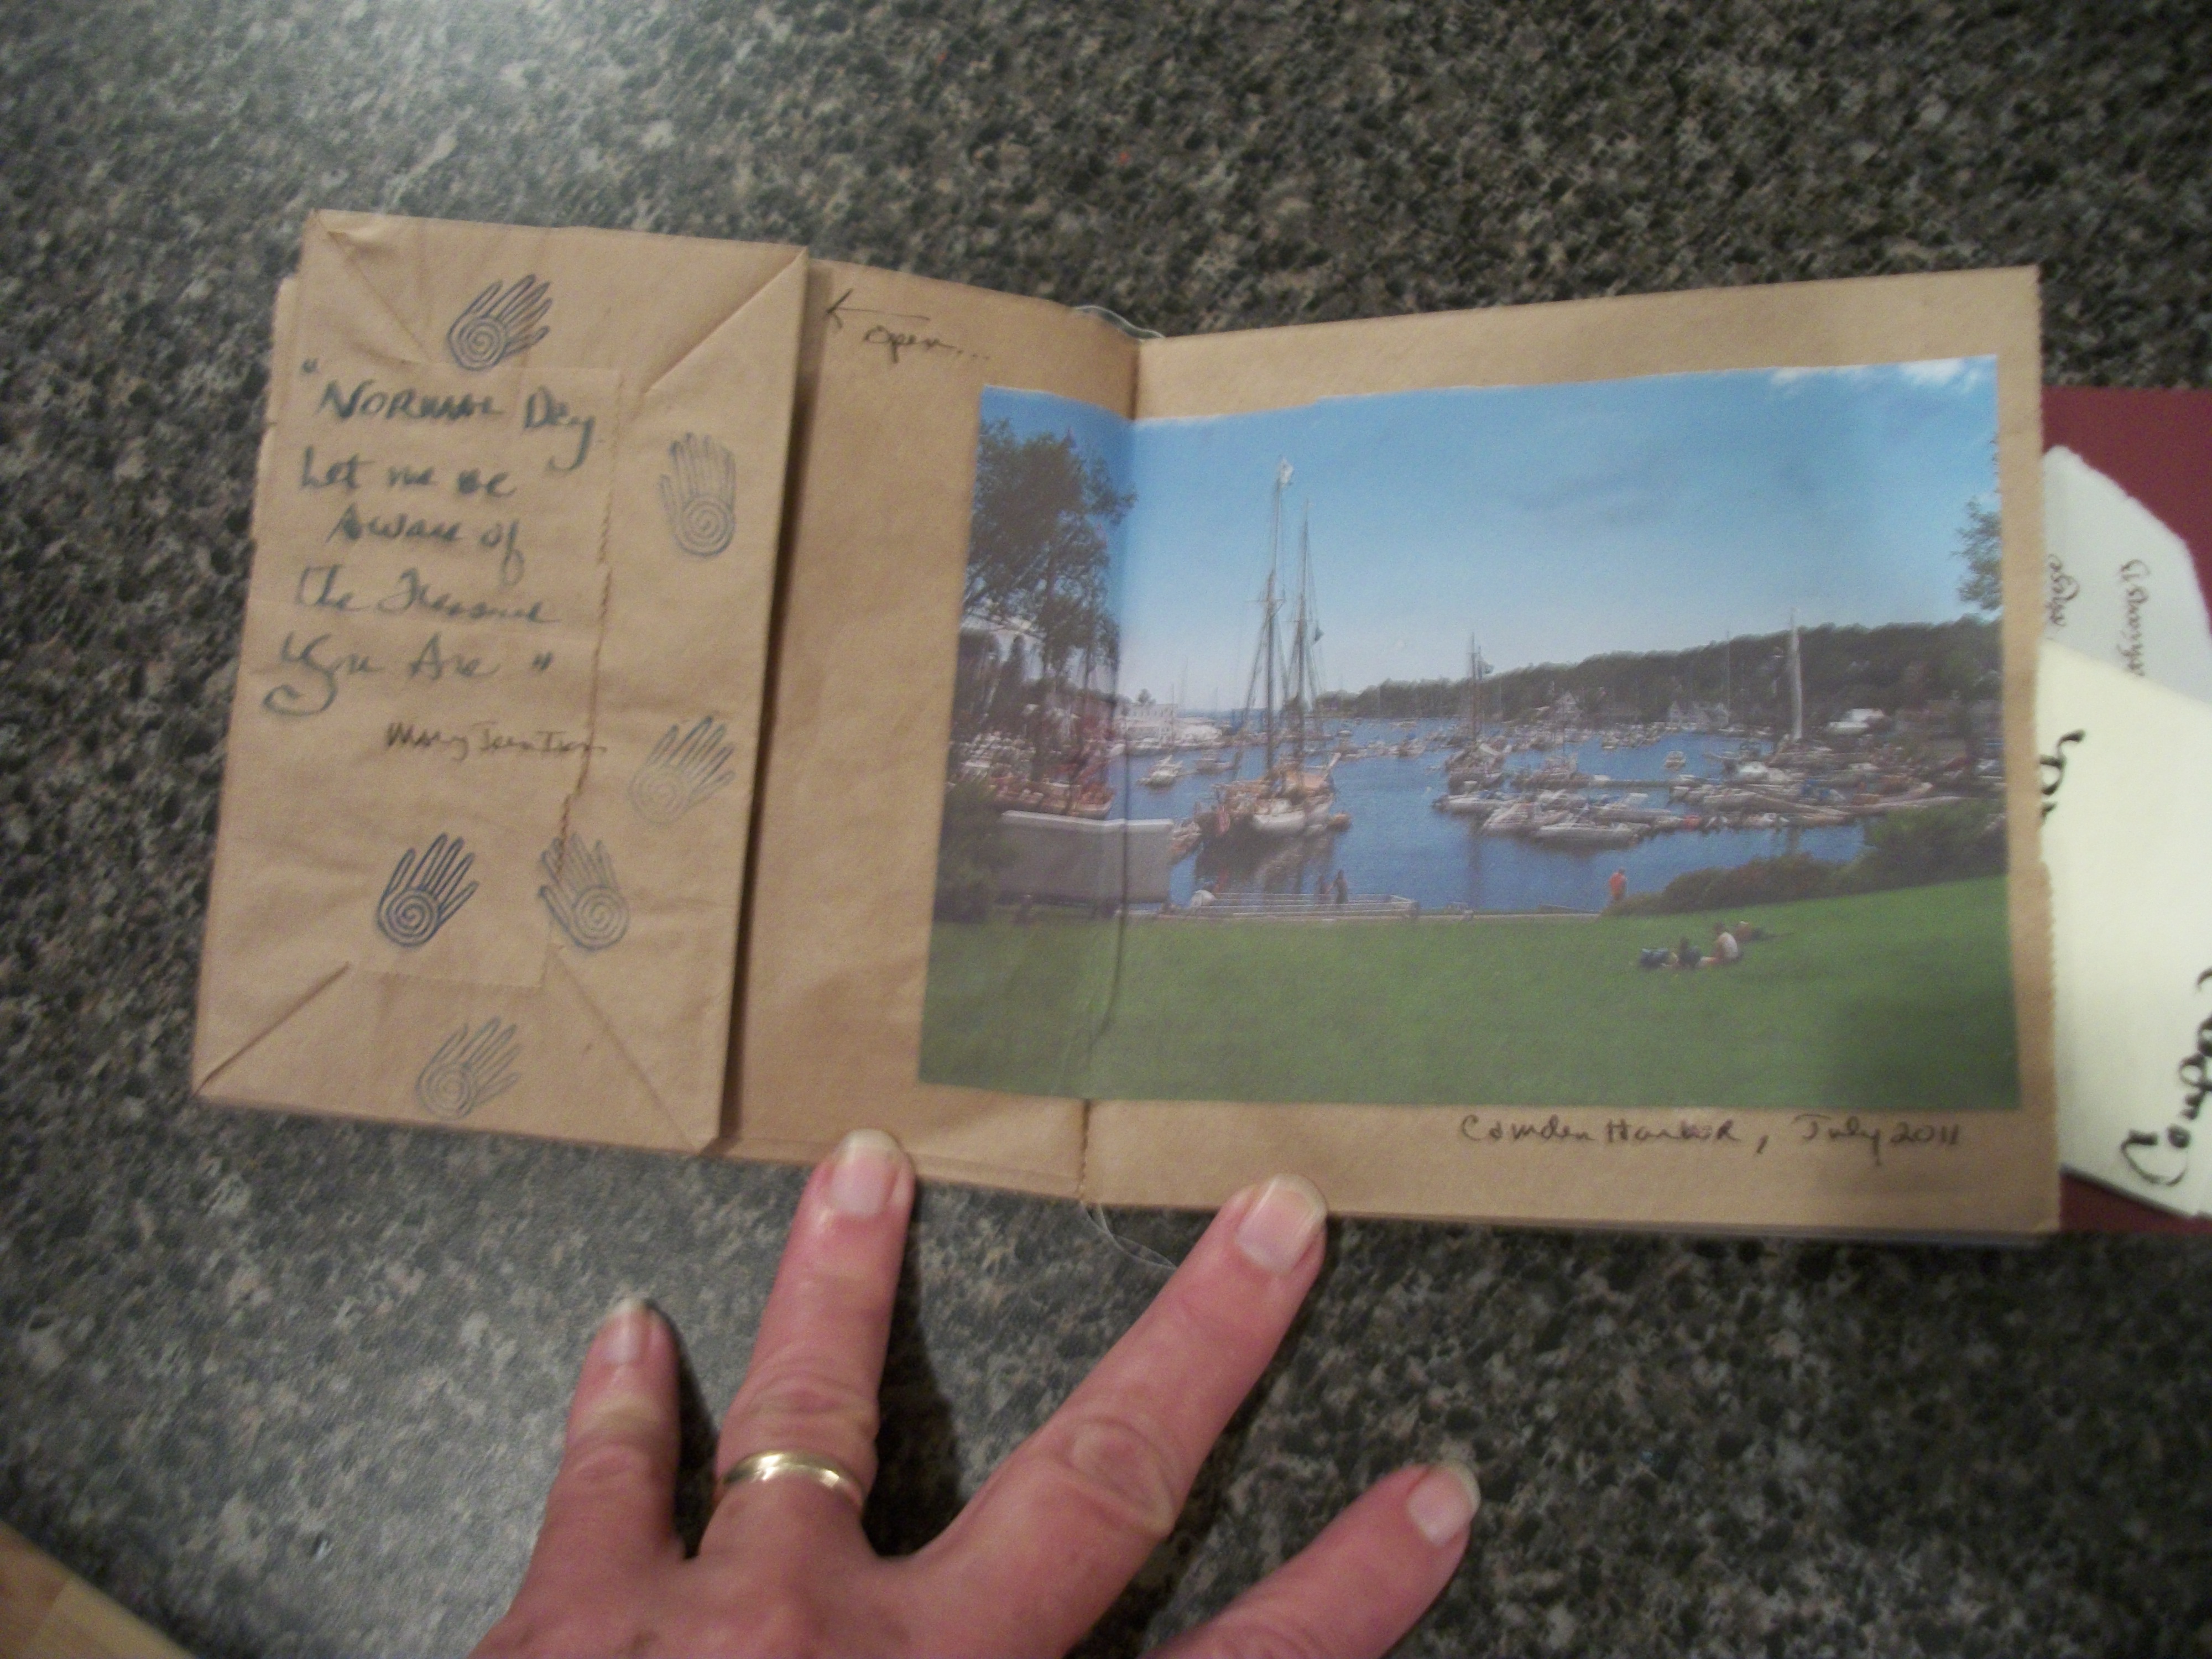 Turkey Tracks: Brown Paper Bag Book Project | Louisa Enright's Blog